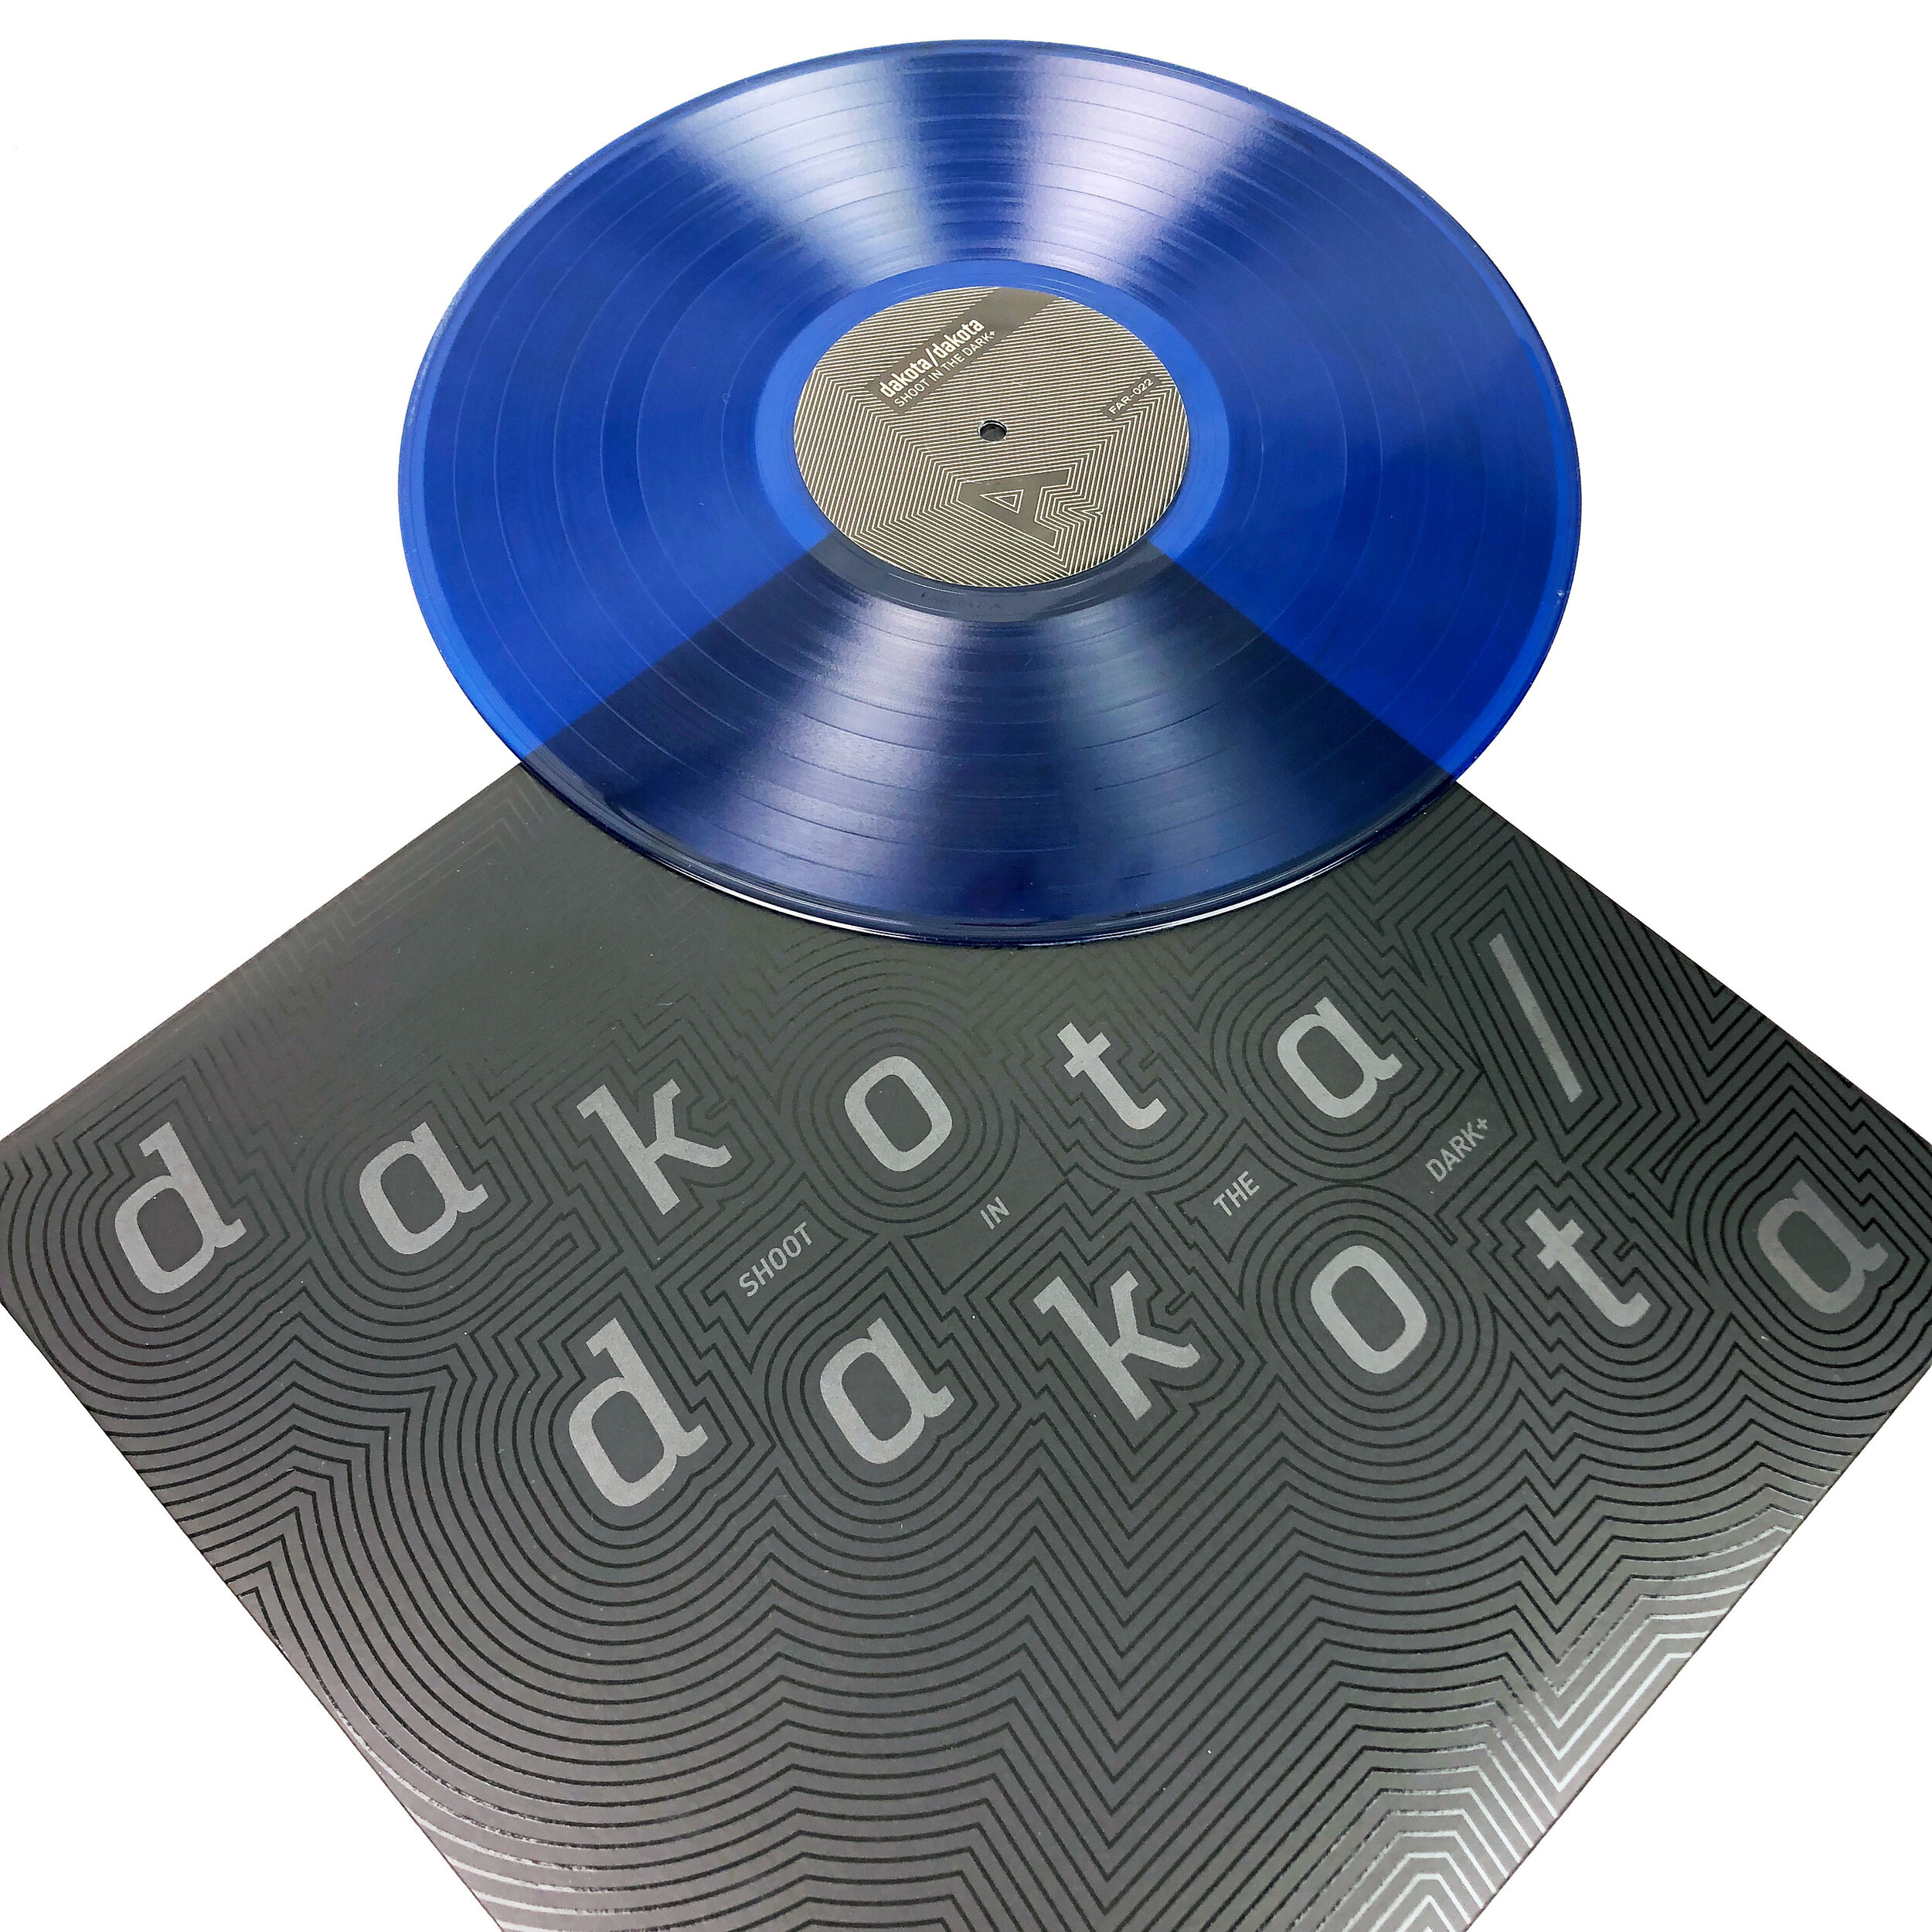 Dakota-Dakota-Shoot-In-The-Dark-LP-reissue-photo-2.jpg